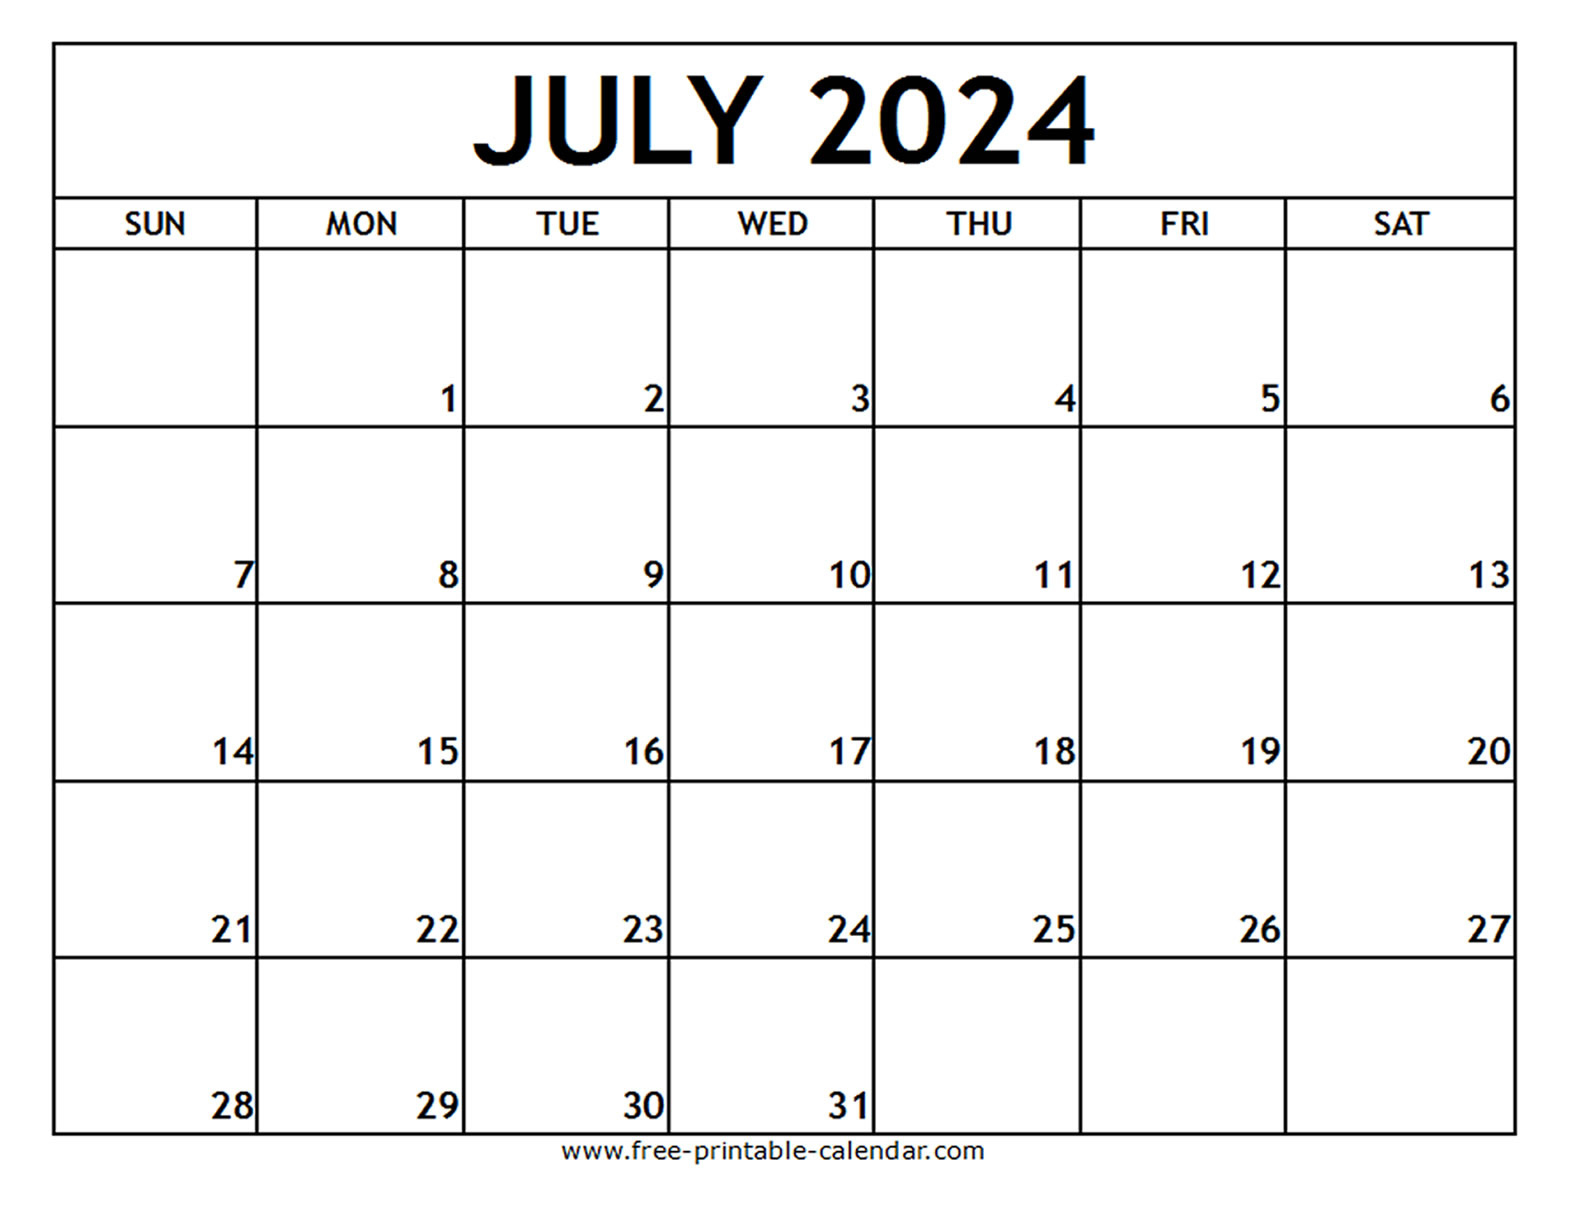 July 2024 Printable Calendar - Free-Printable-Calendar in Free Calendar Template July 2024